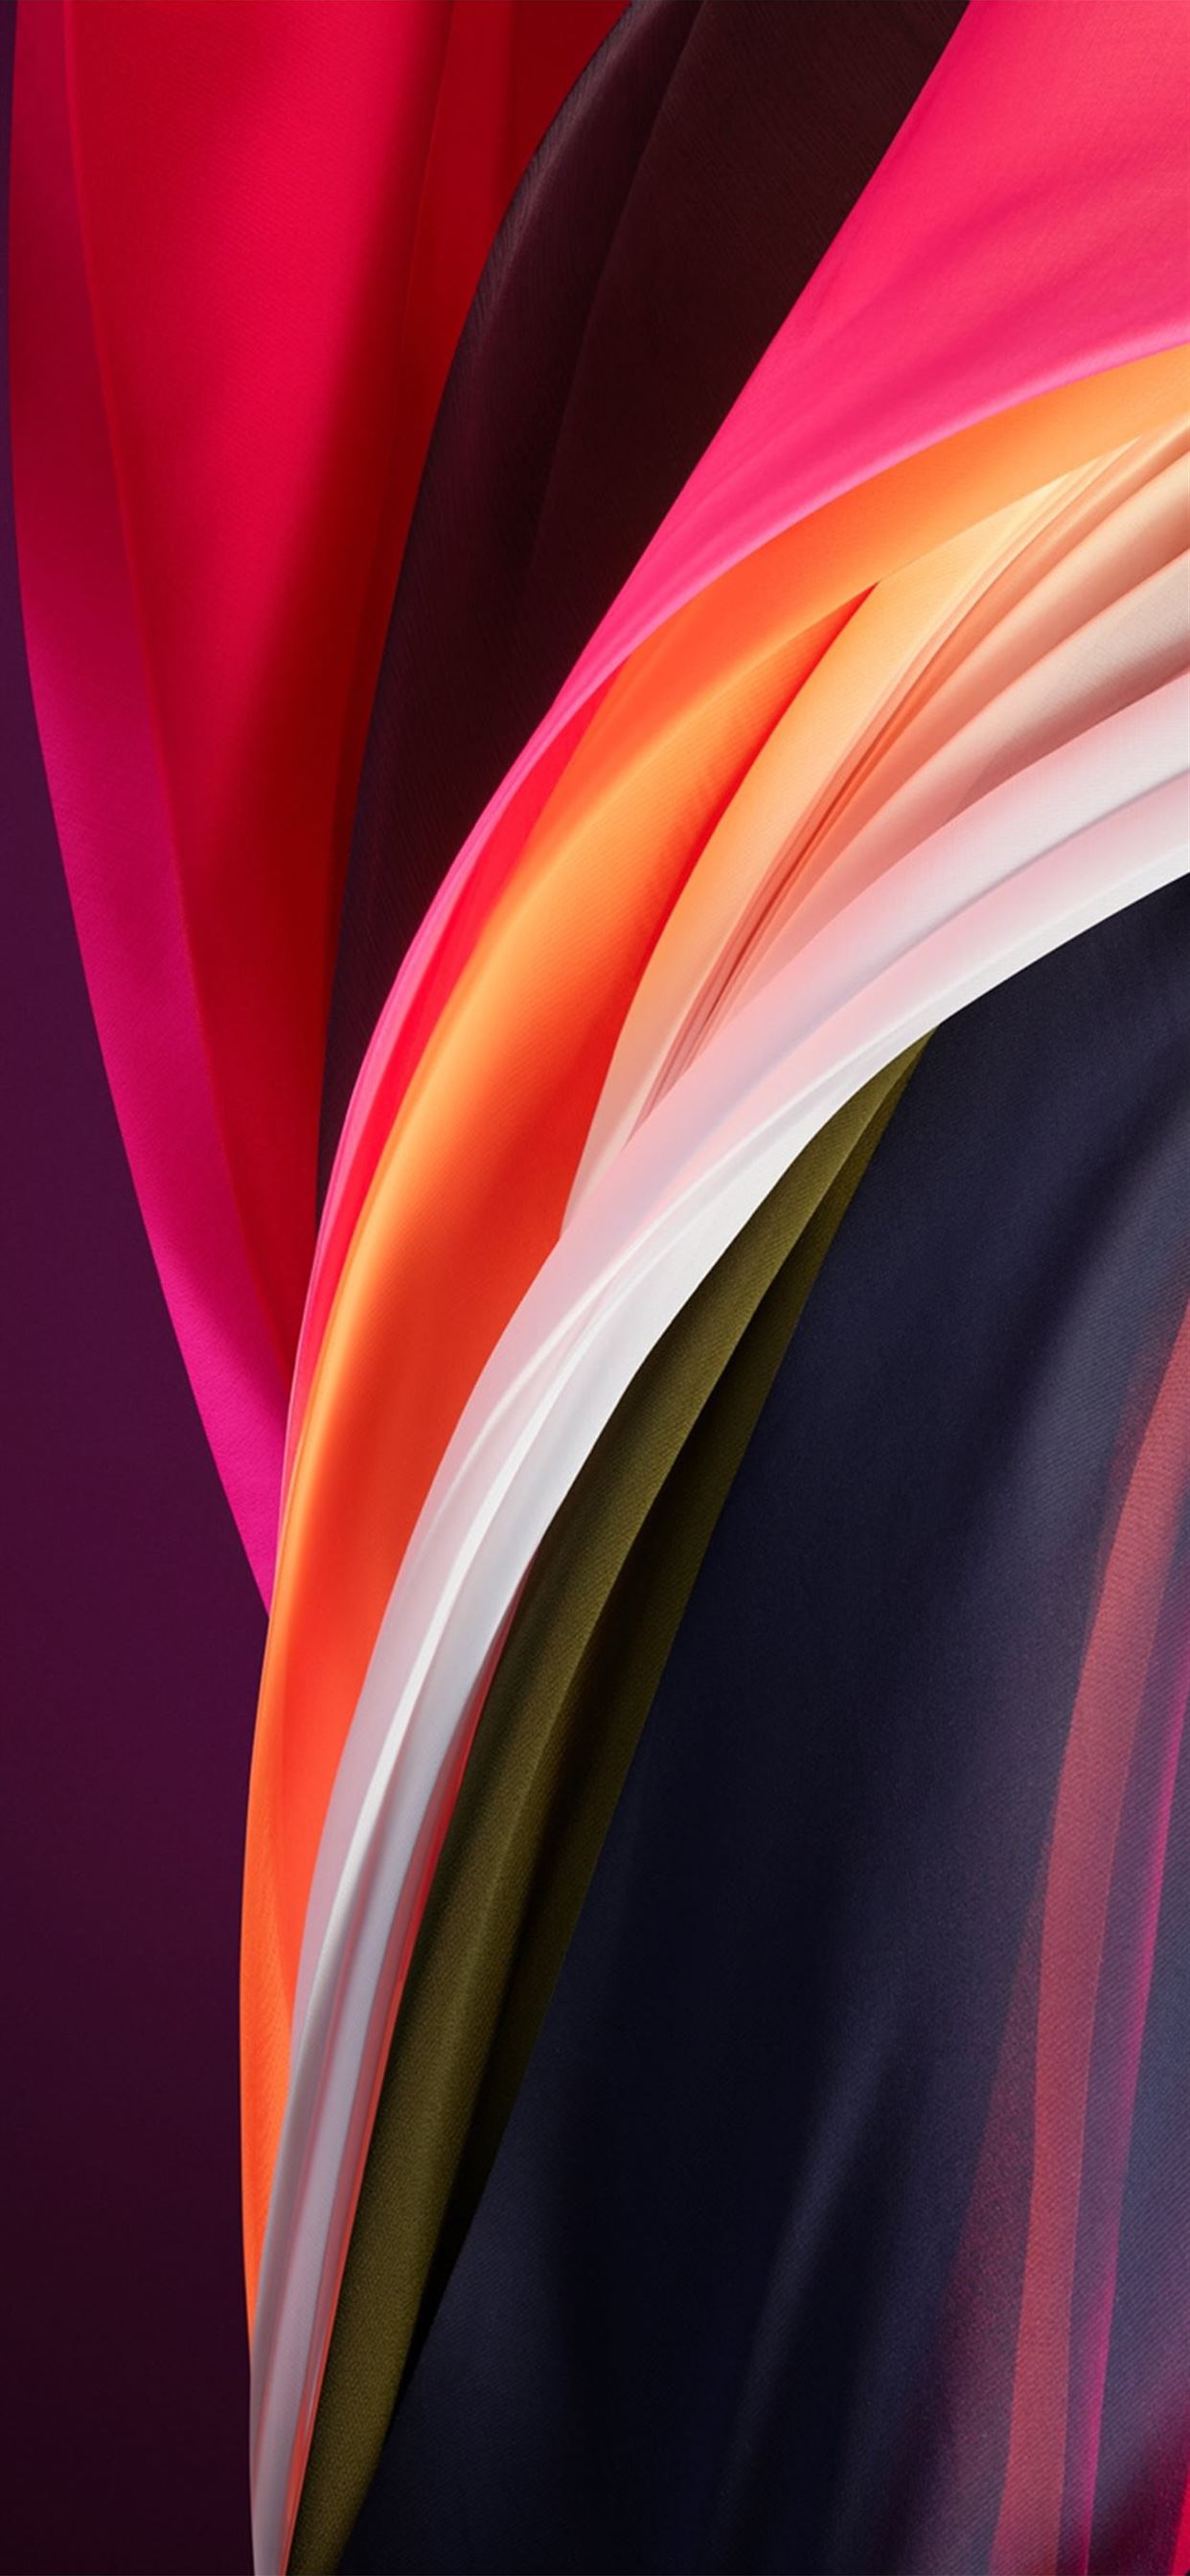 iphone se 2020 stock wallpaper Silk Purple Light iPhone X Wallpapers Free  Download